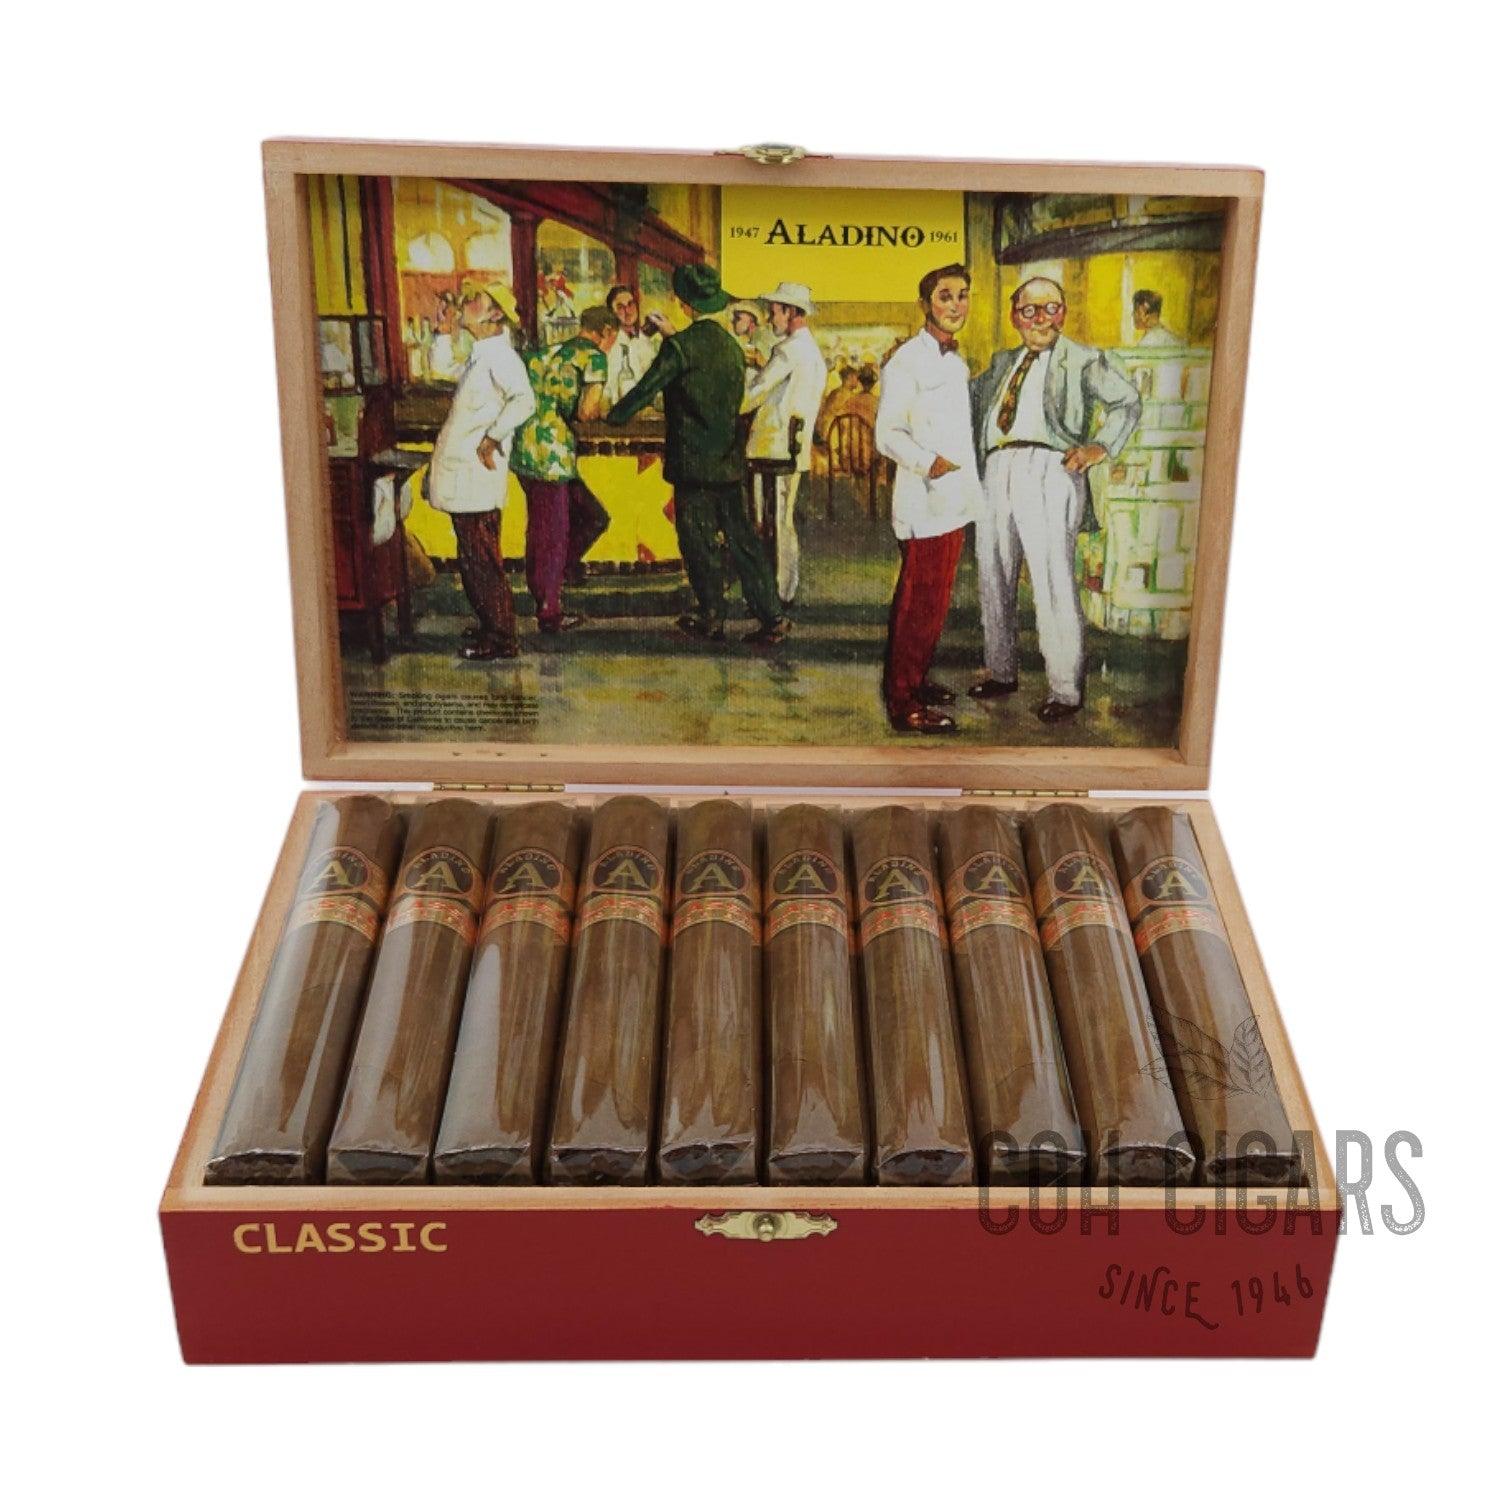 Aladino Cigar | JRE Tobacco Farm Classic Robusto | Box 20 - hk.cohcigars